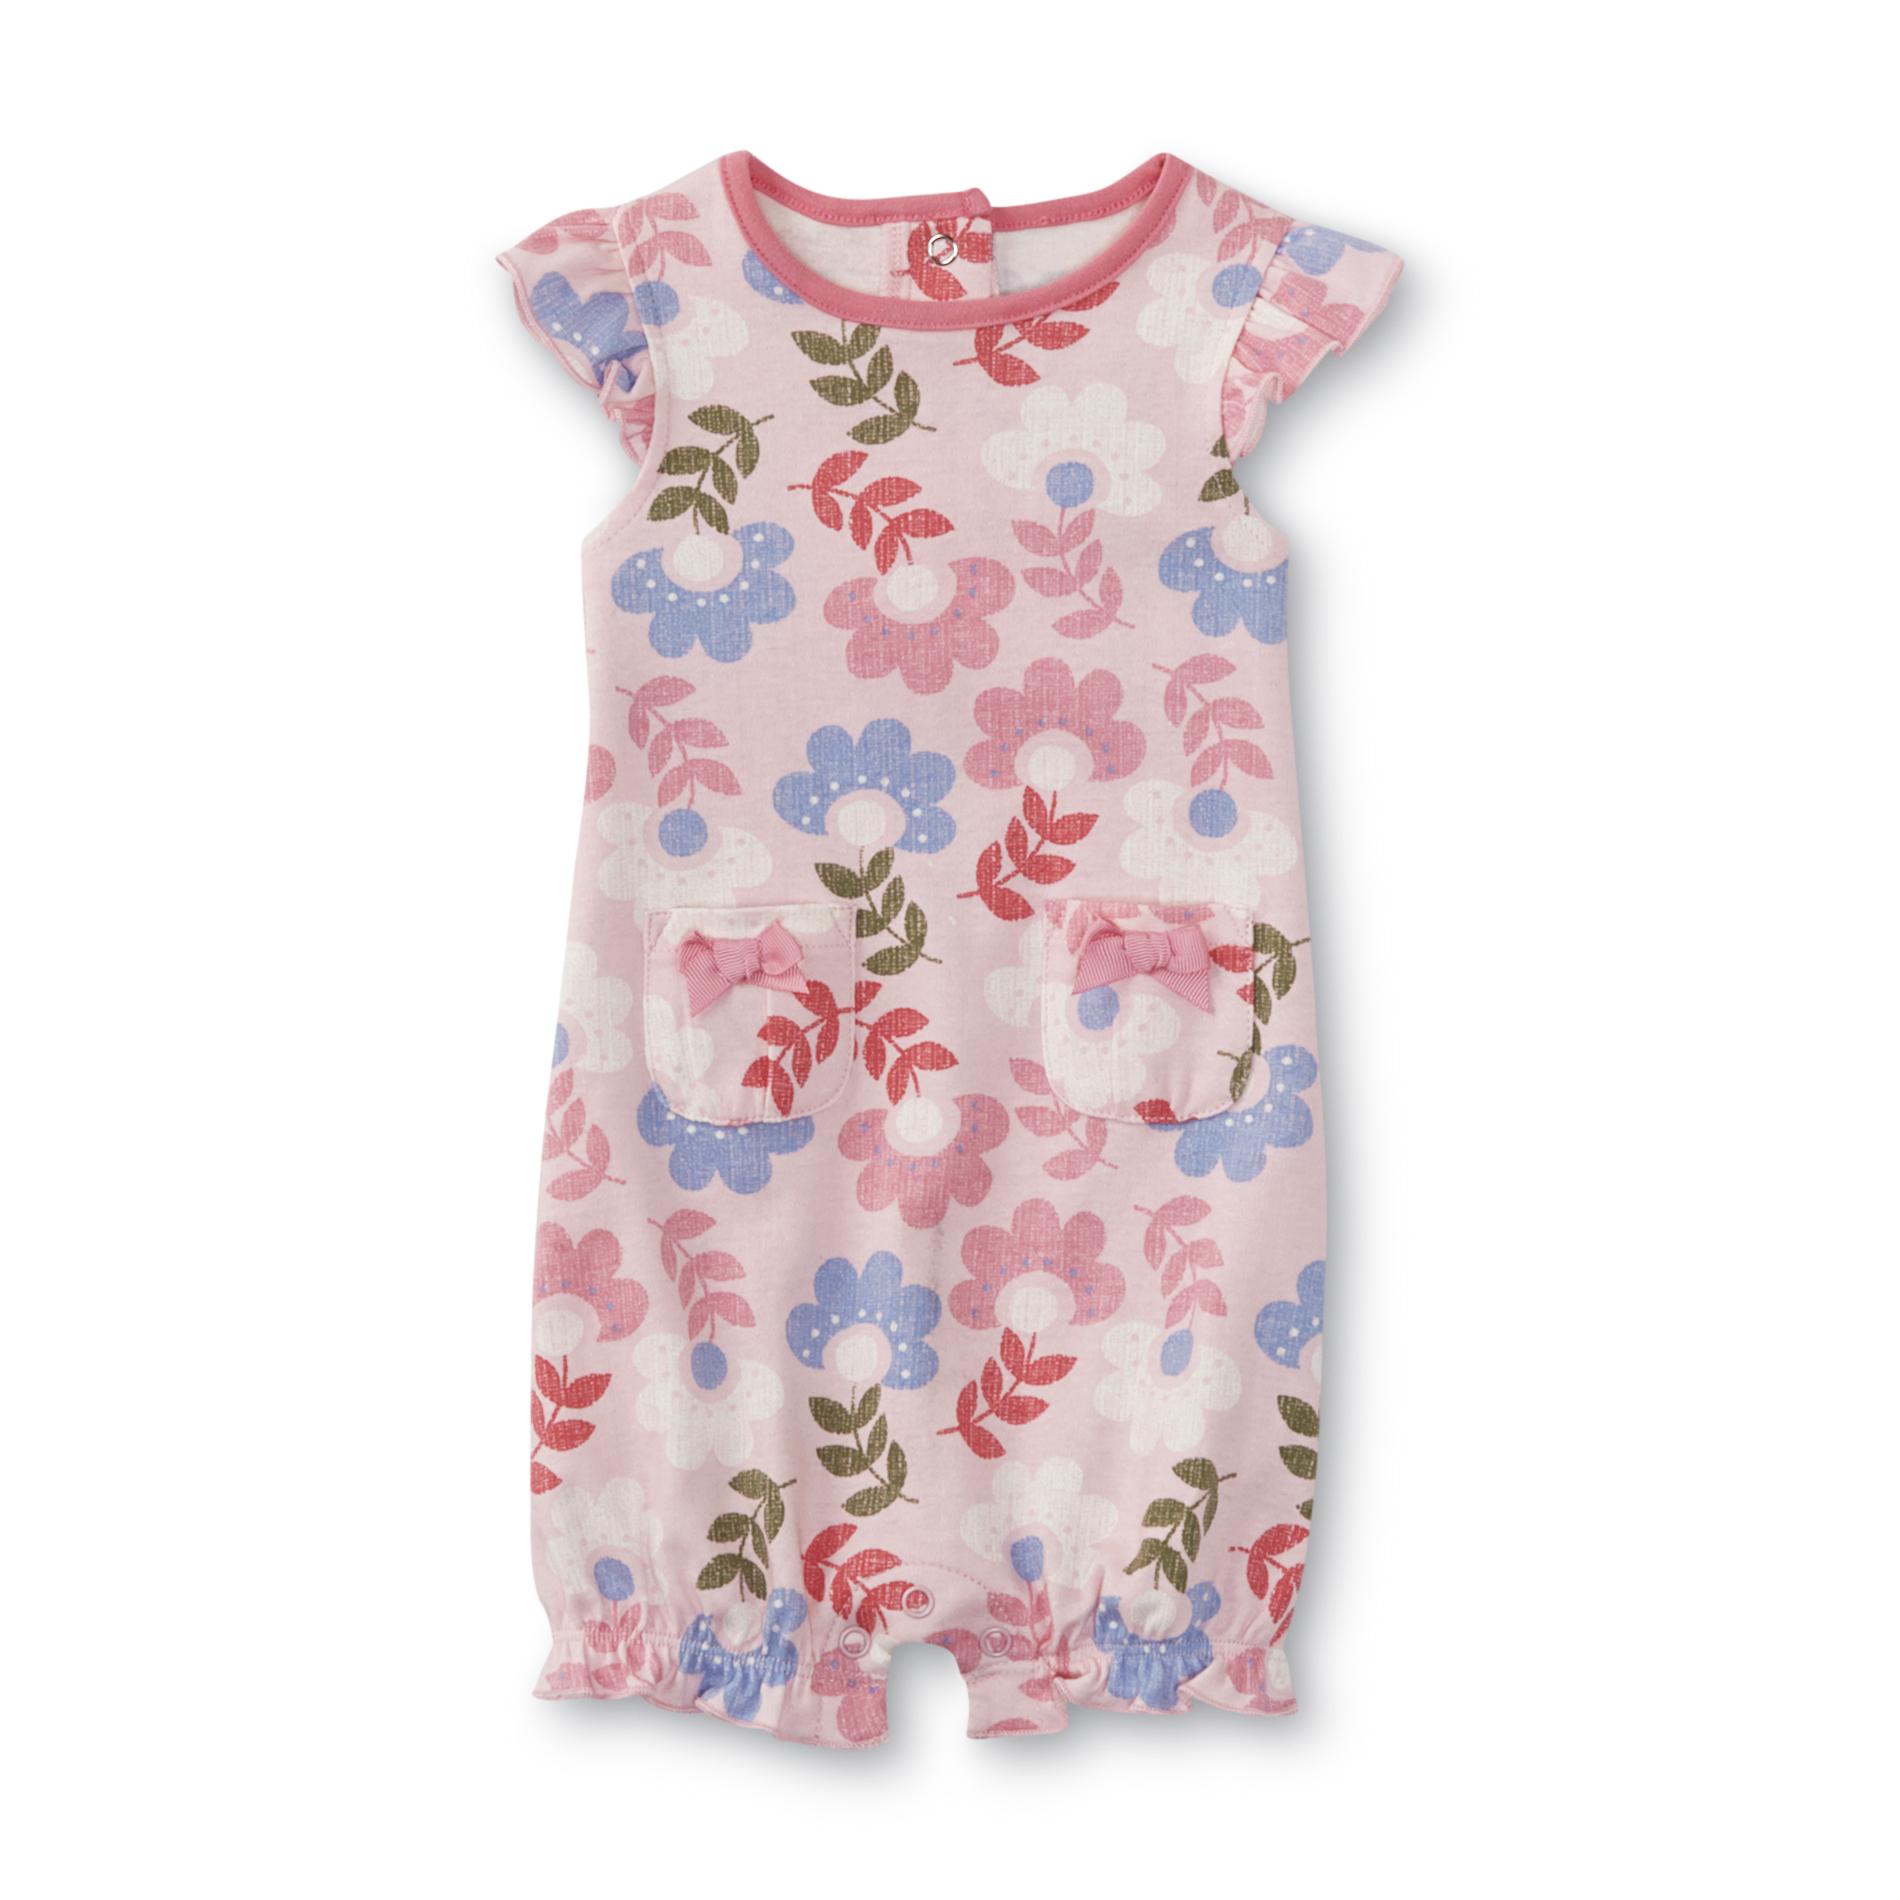 Little Wonders Newborn & Infant Girl's Romper - Floral Print